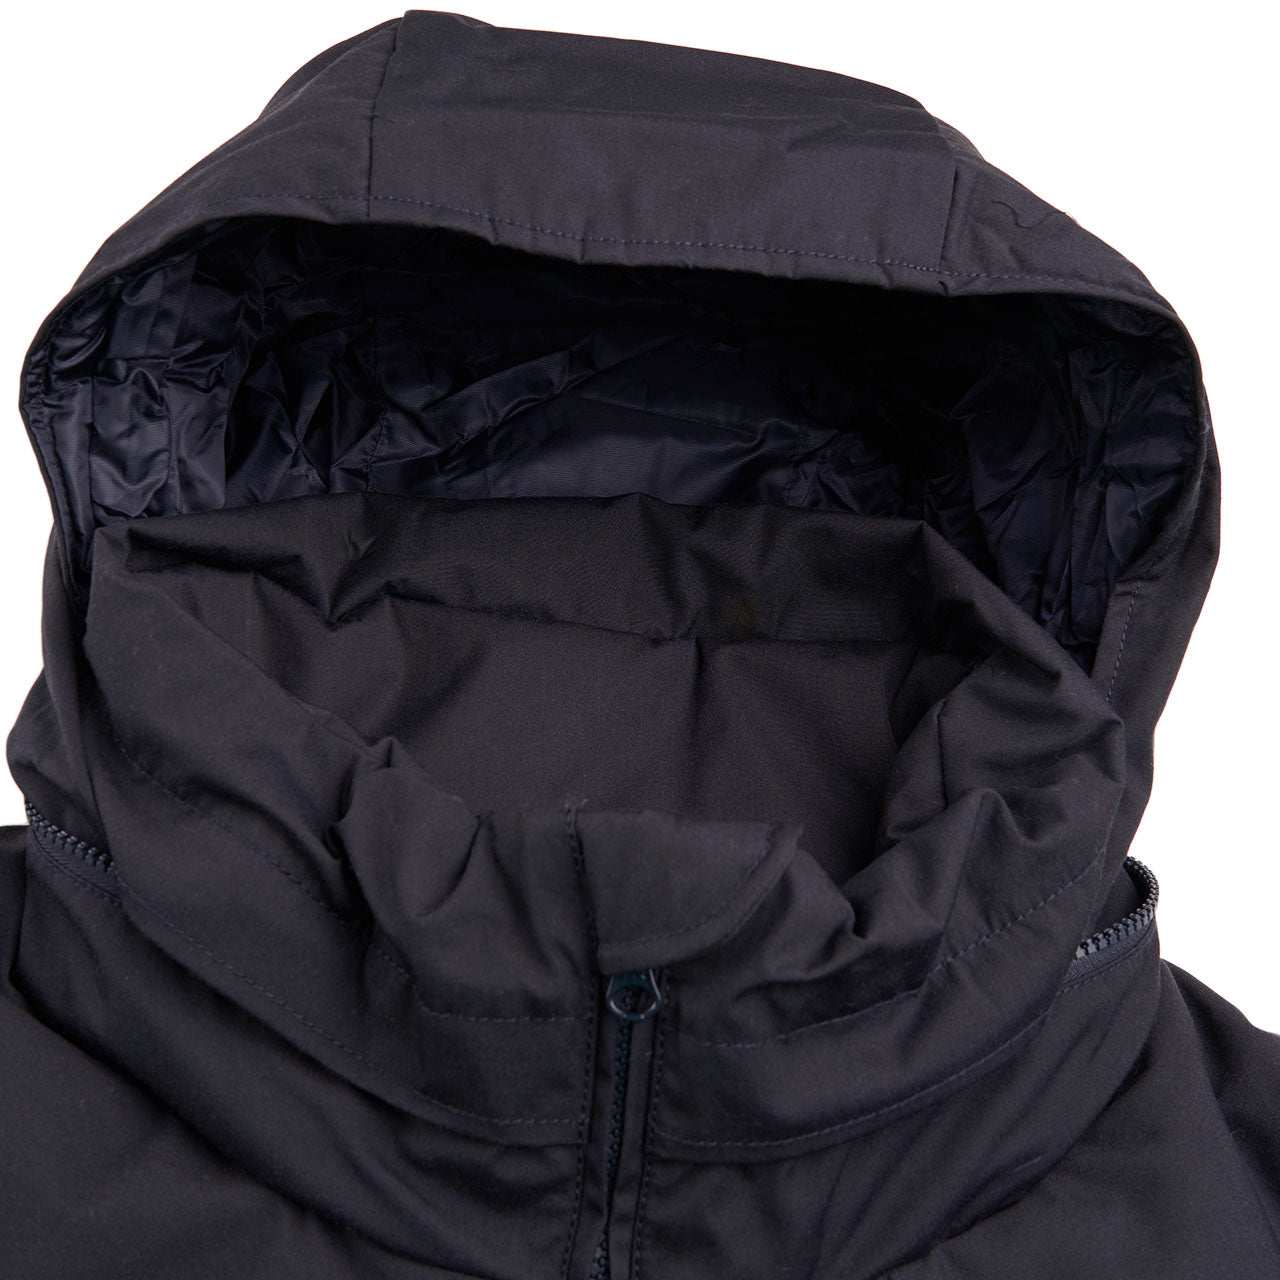 nanamica insulation jacket (dark navy)